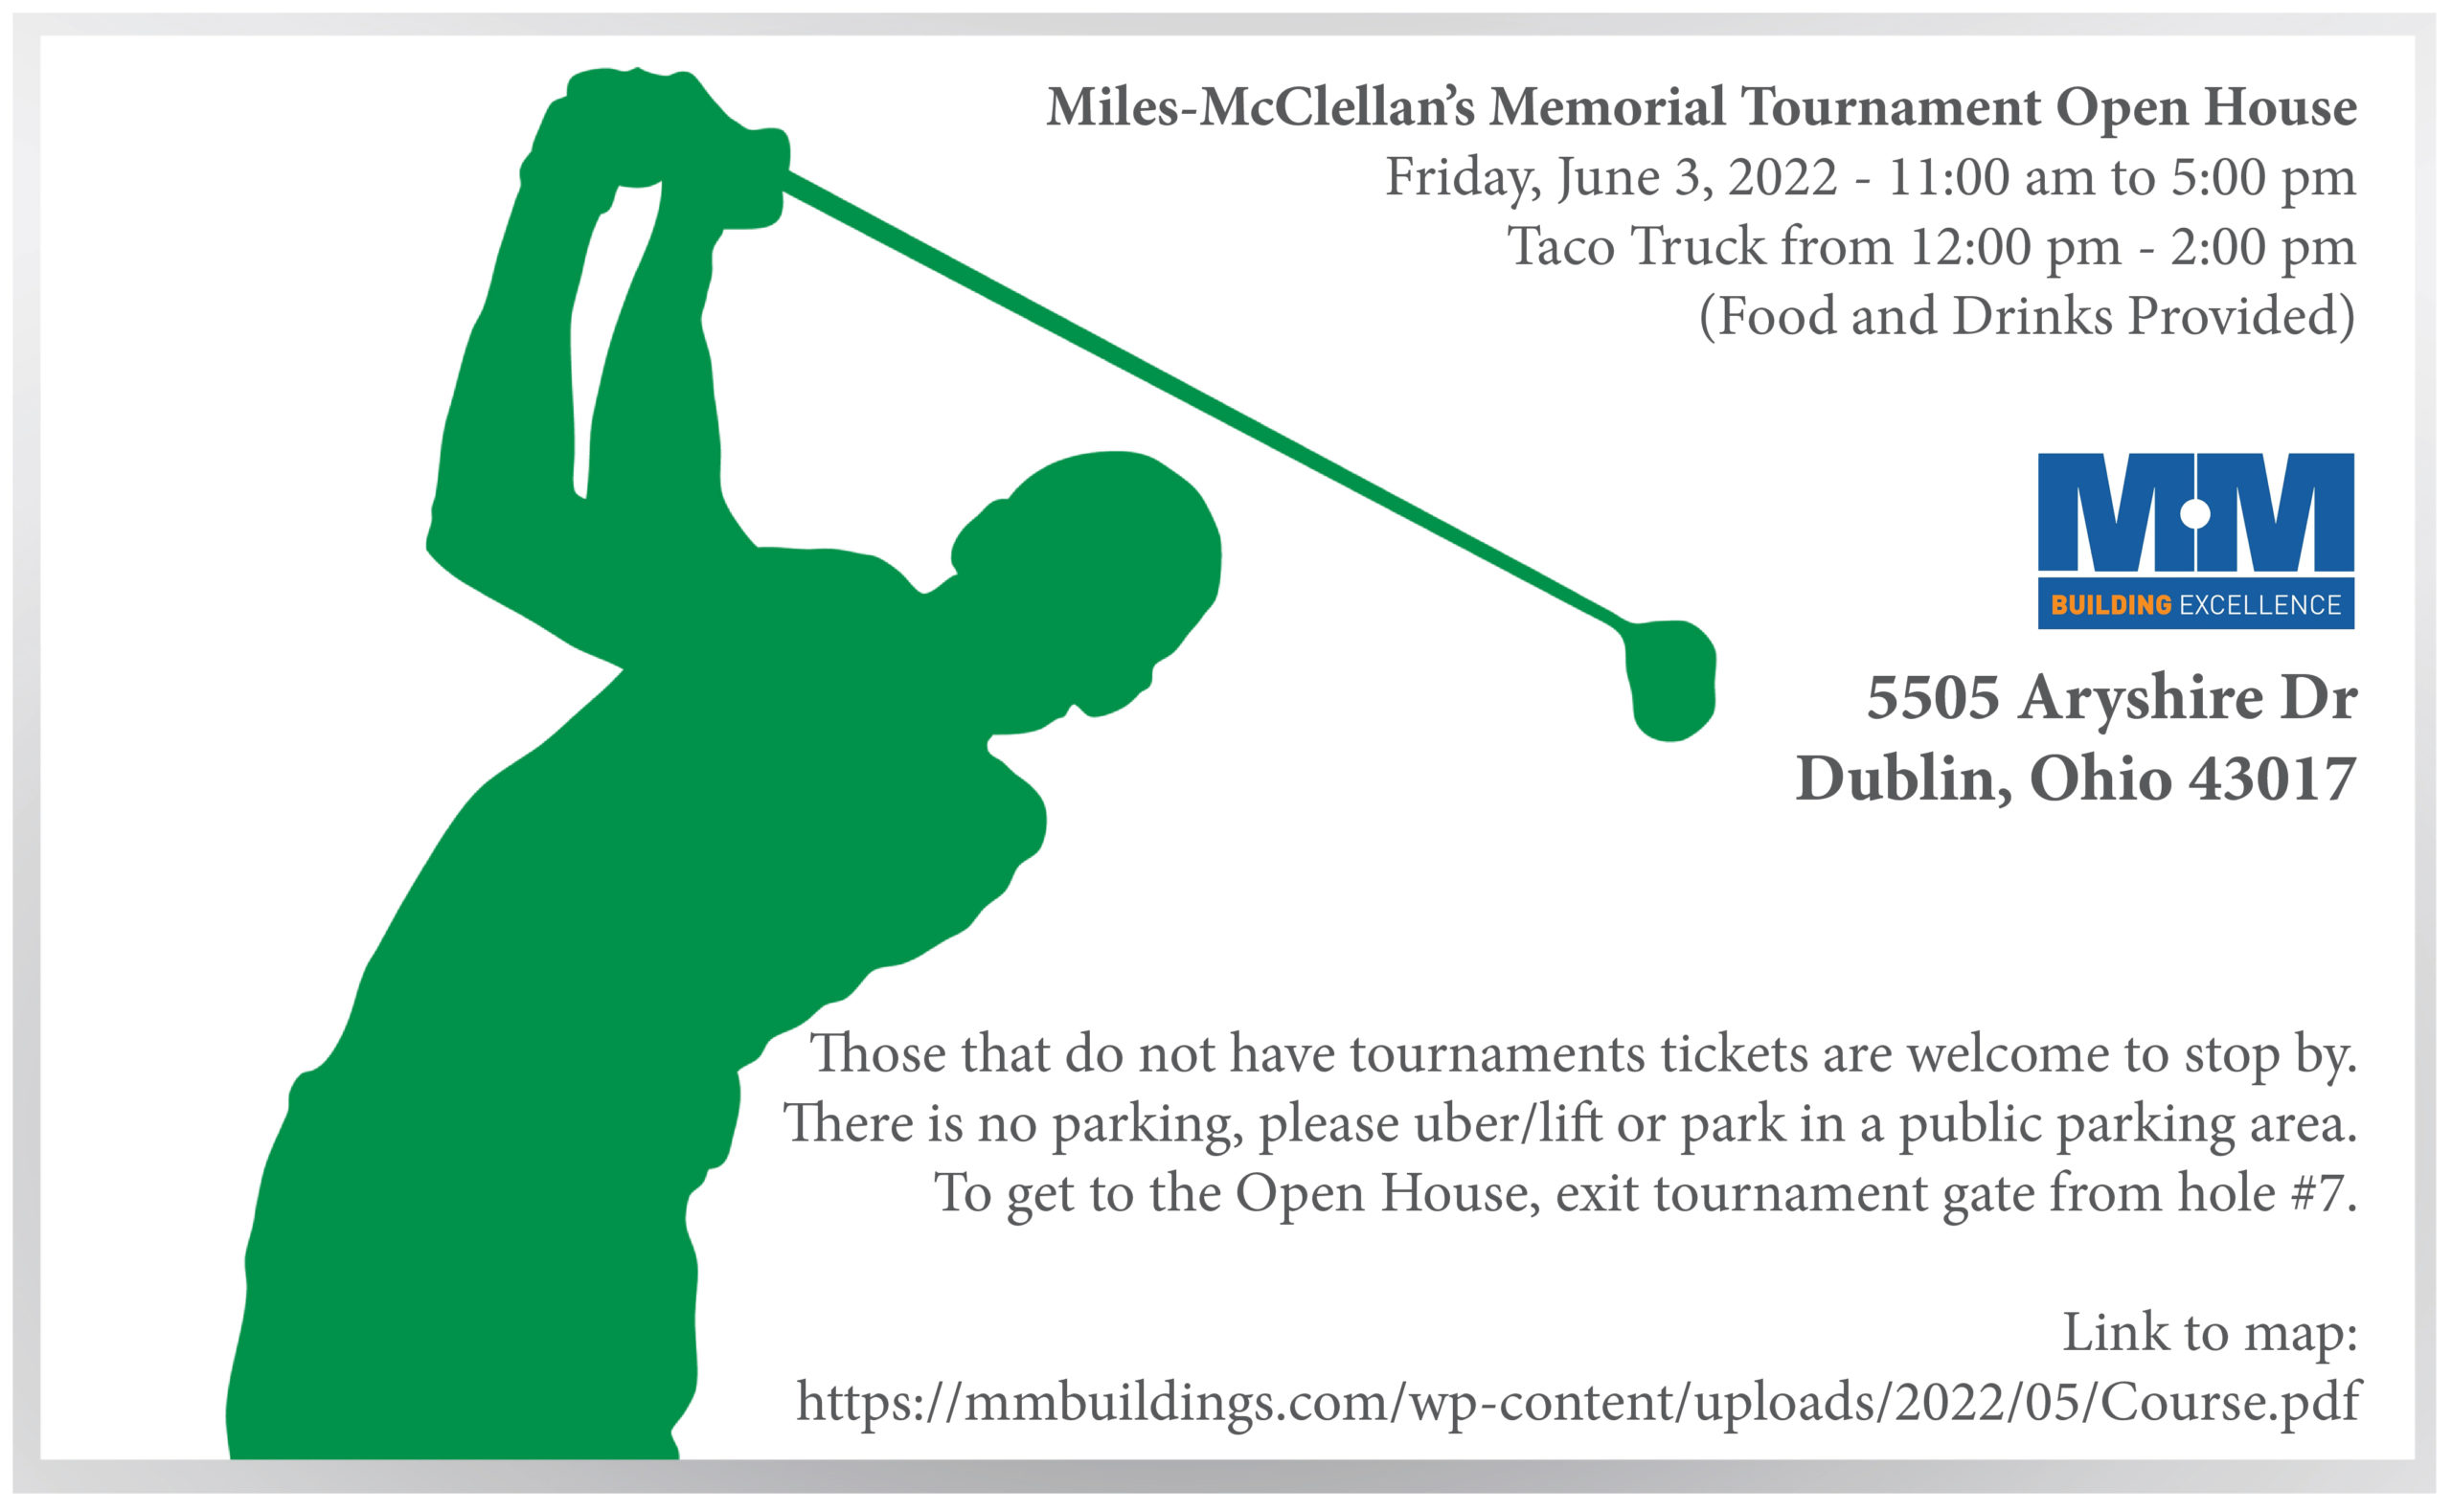 MilesMcClennan Memorial Tournament Open House